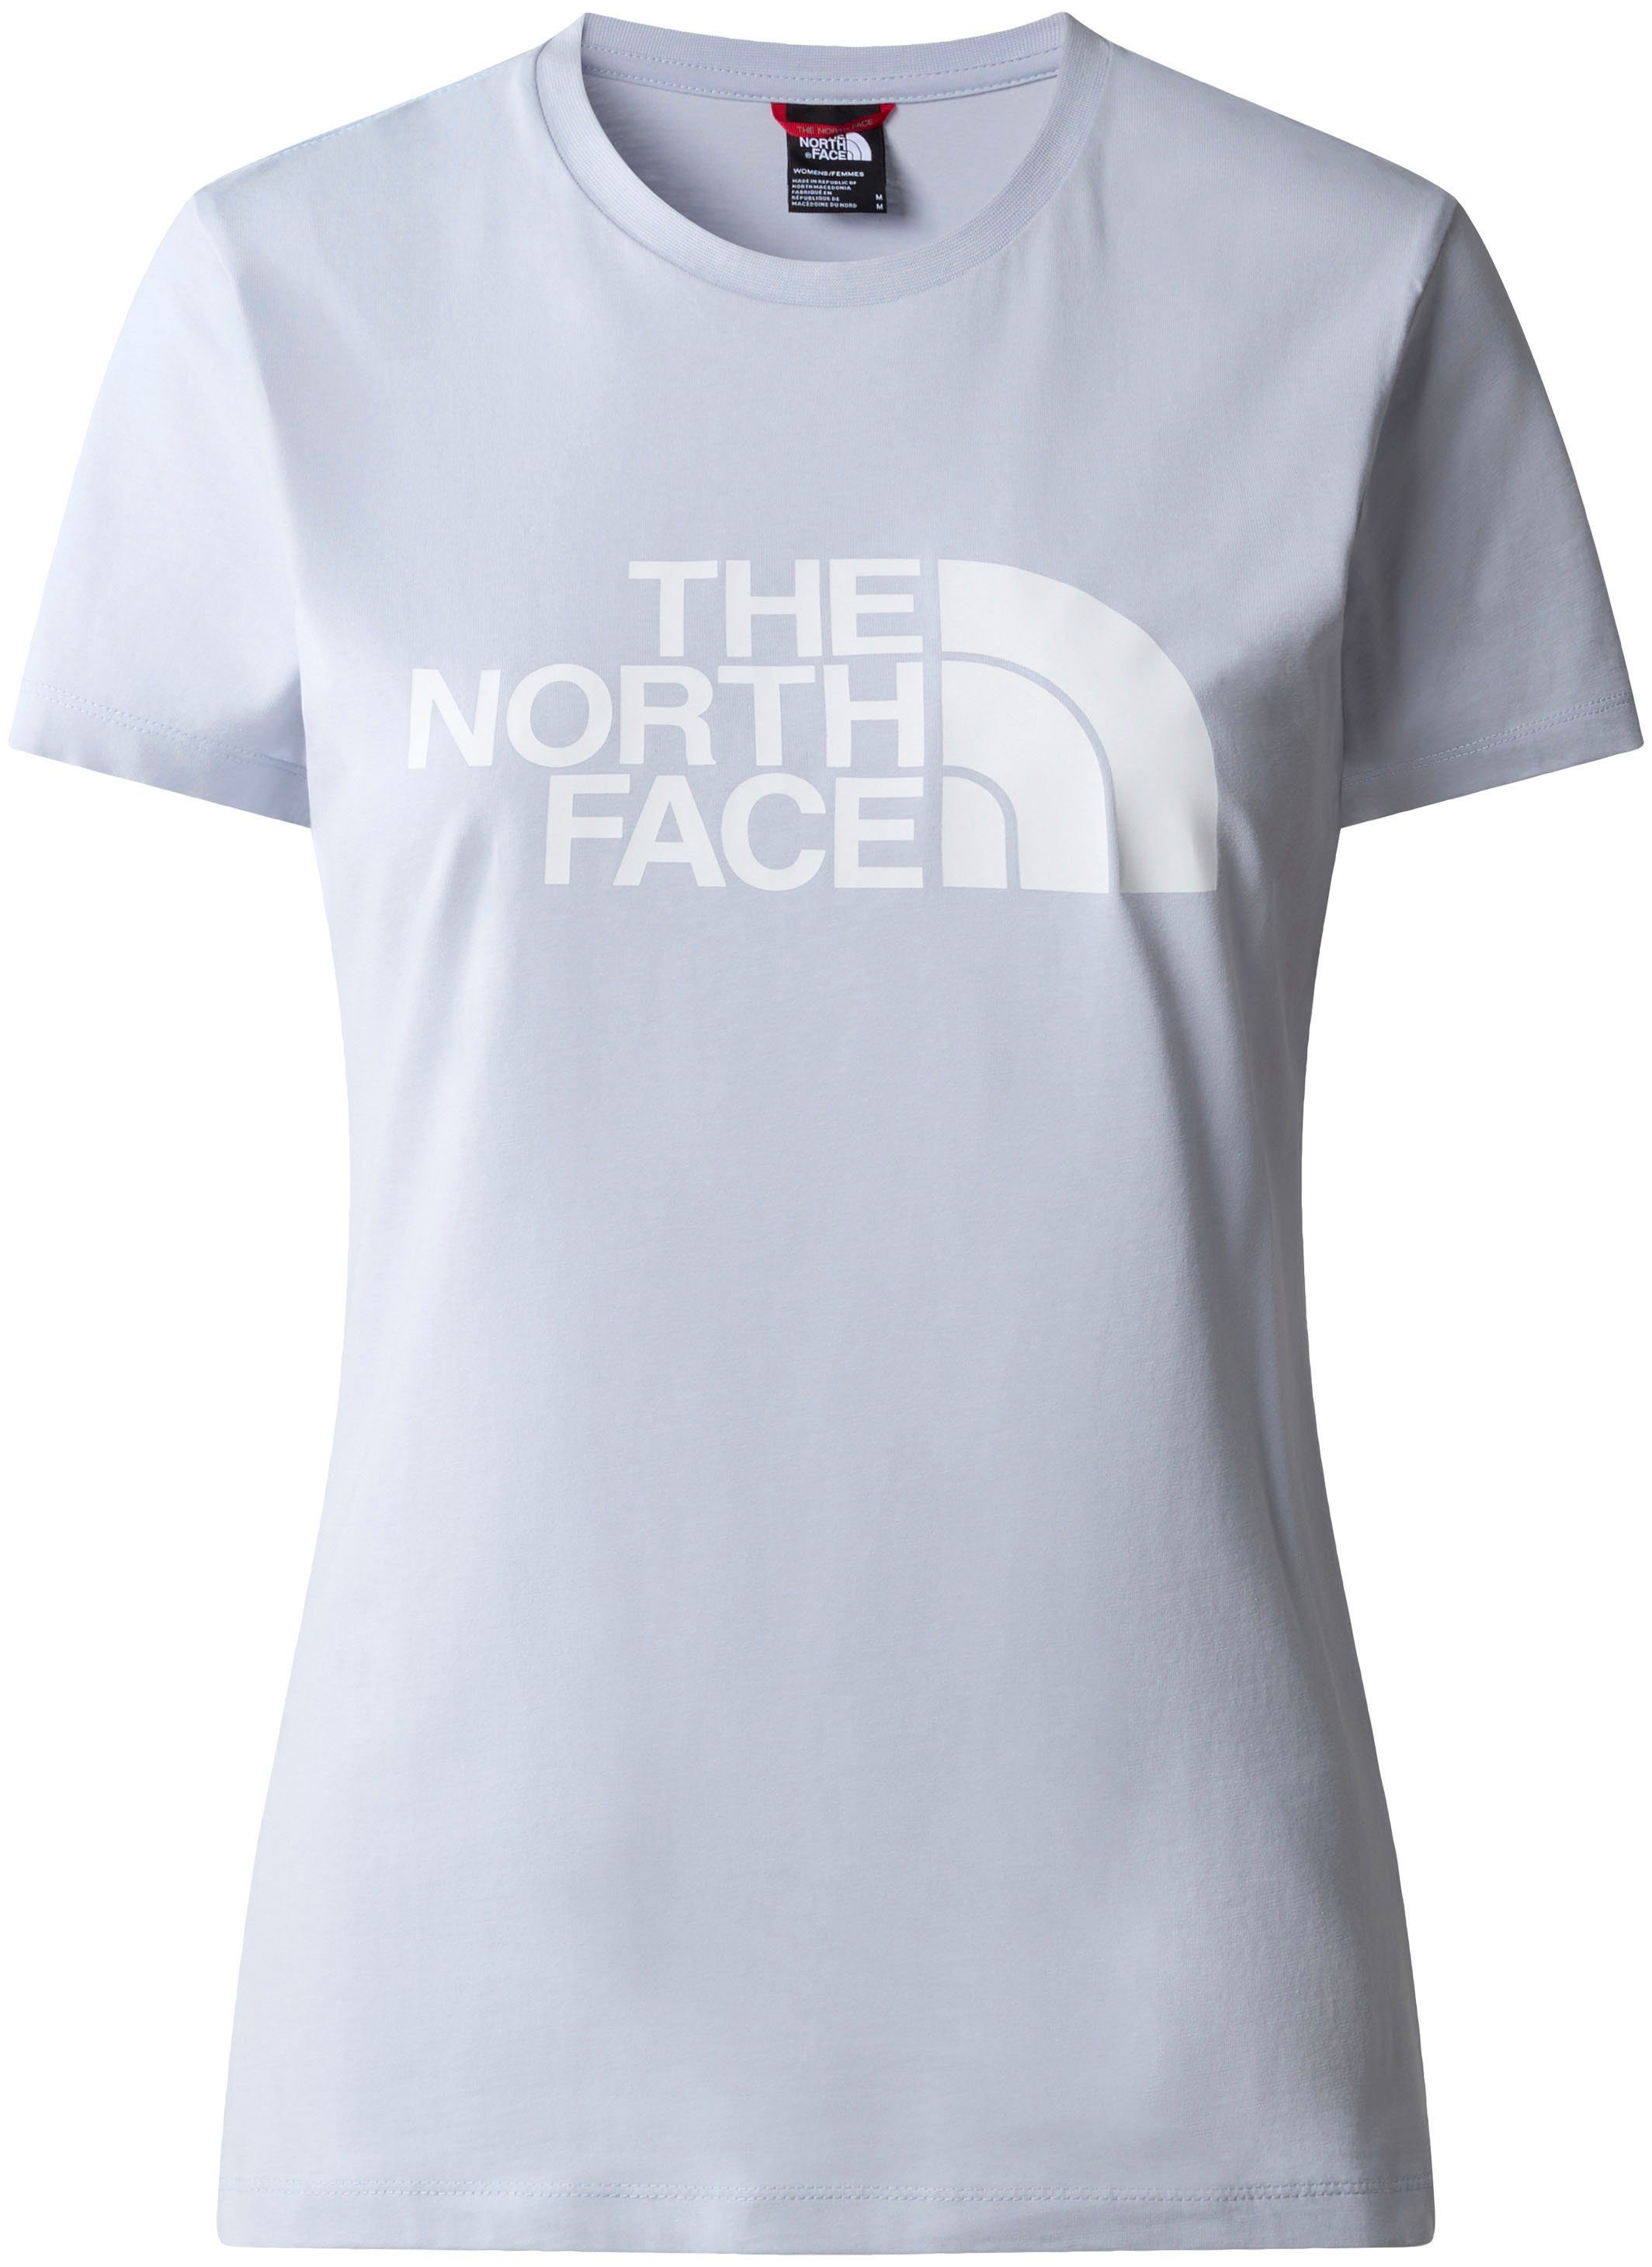 The North Face T-Shirt hüftlangen TEE EASY Schnitt im